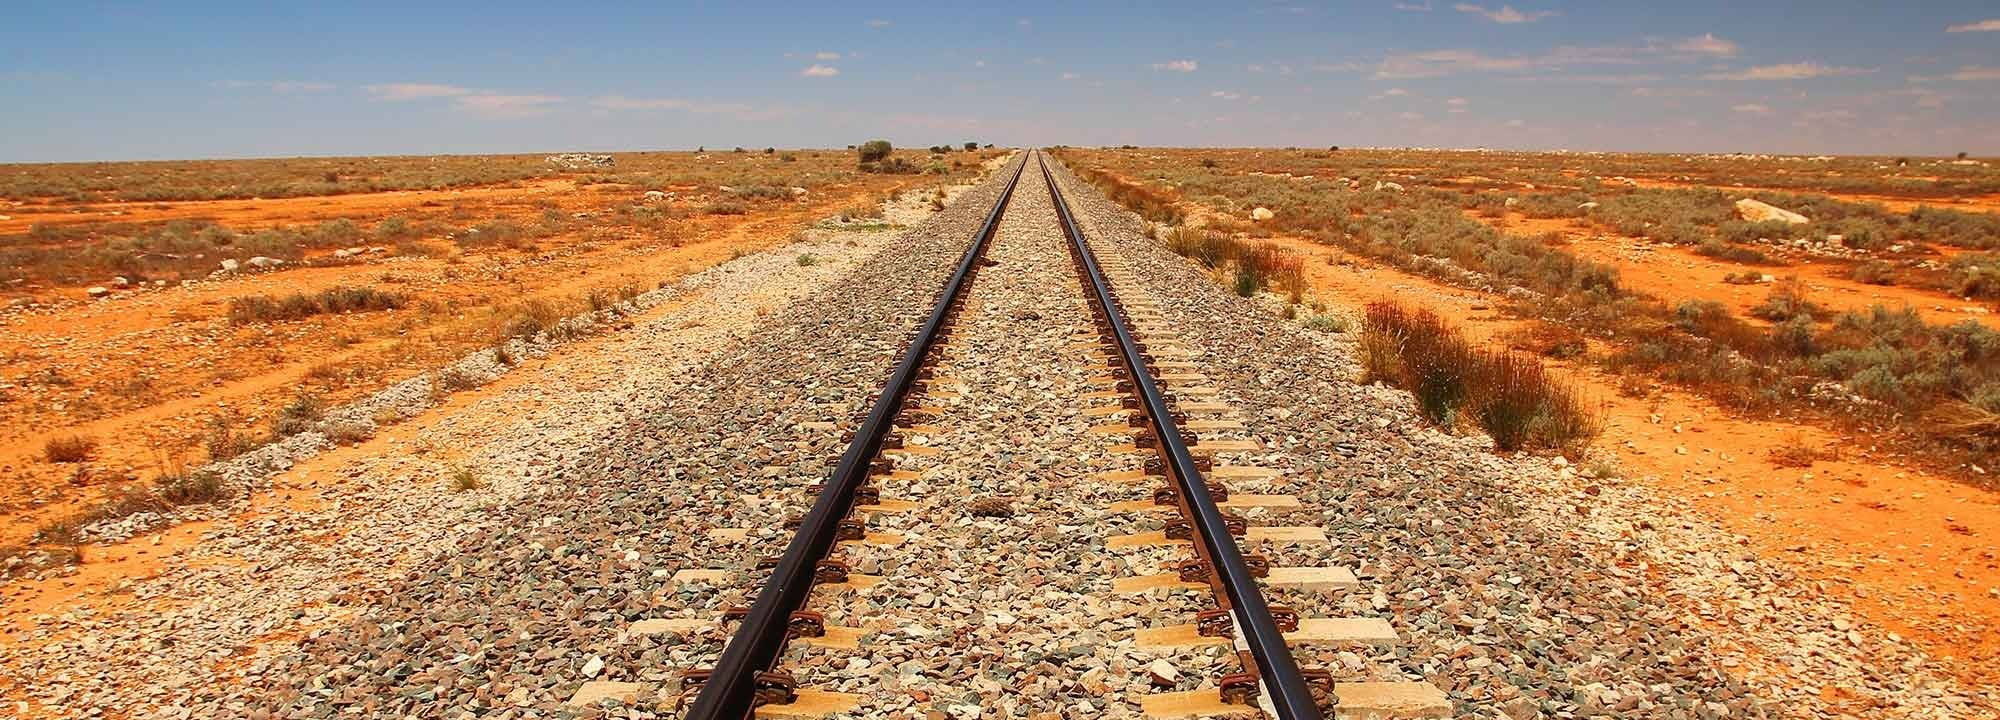 stretch of railway